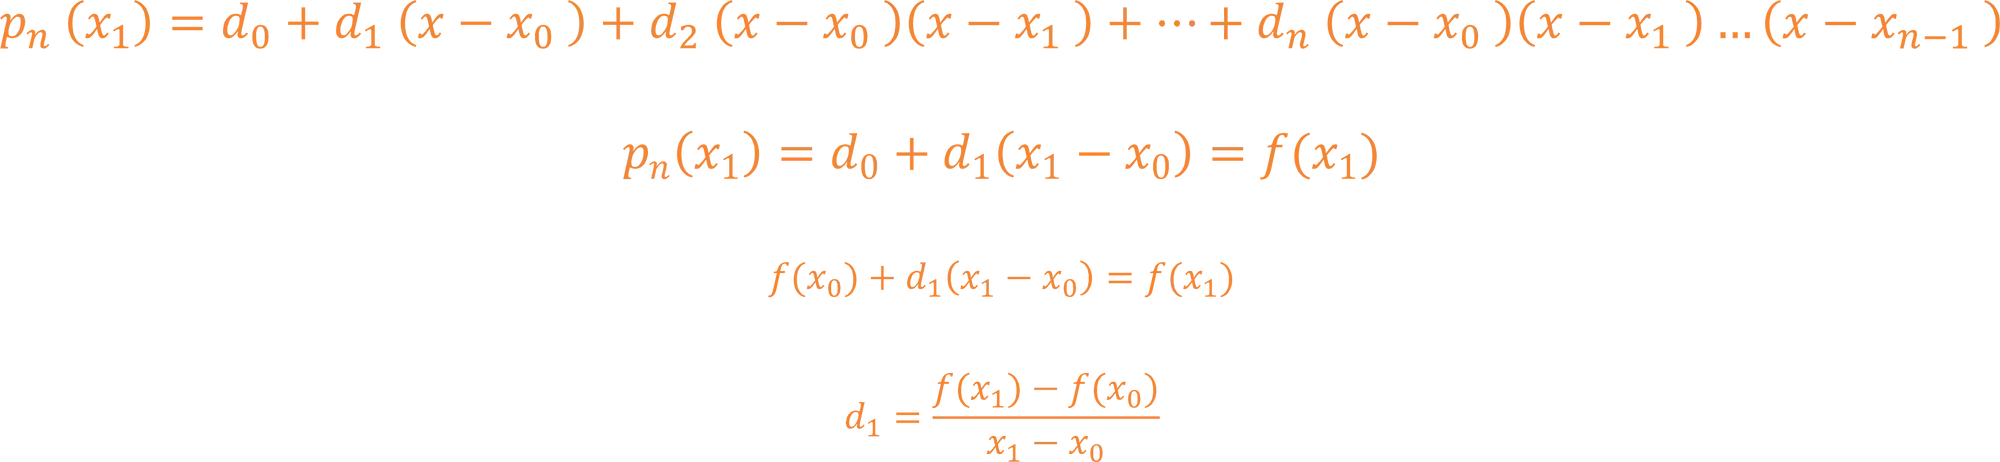 Interpolação de Newton: Cálculo de d1